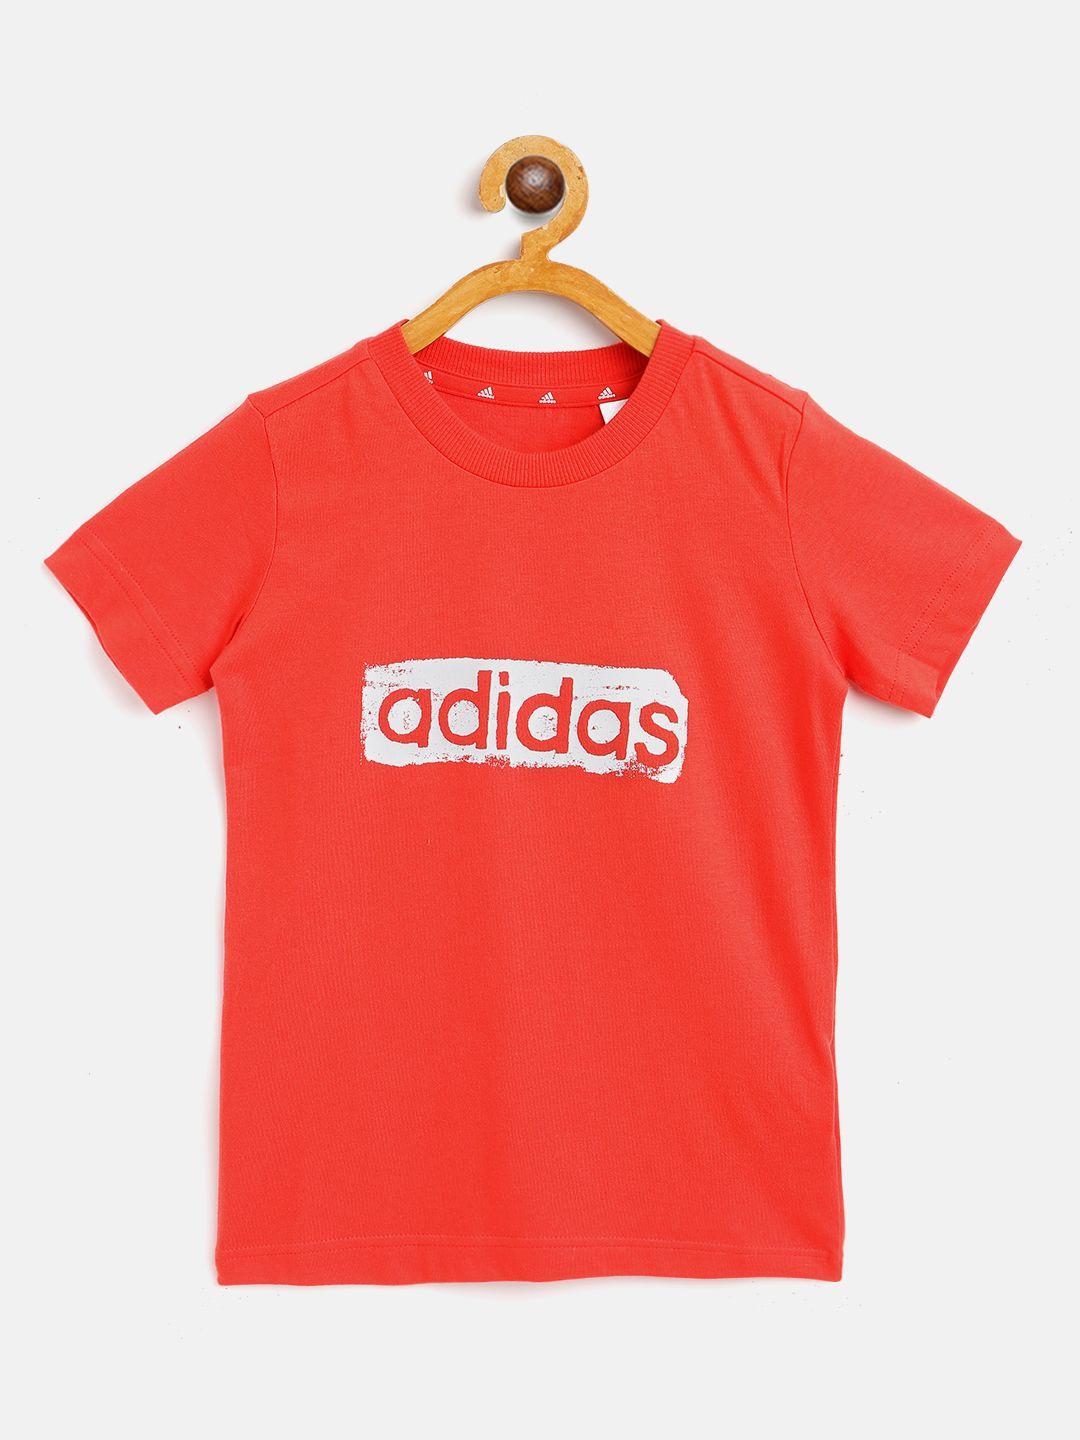 adidas boys red & white brand logo print g t2 round neck cotton sustainable t-shirt